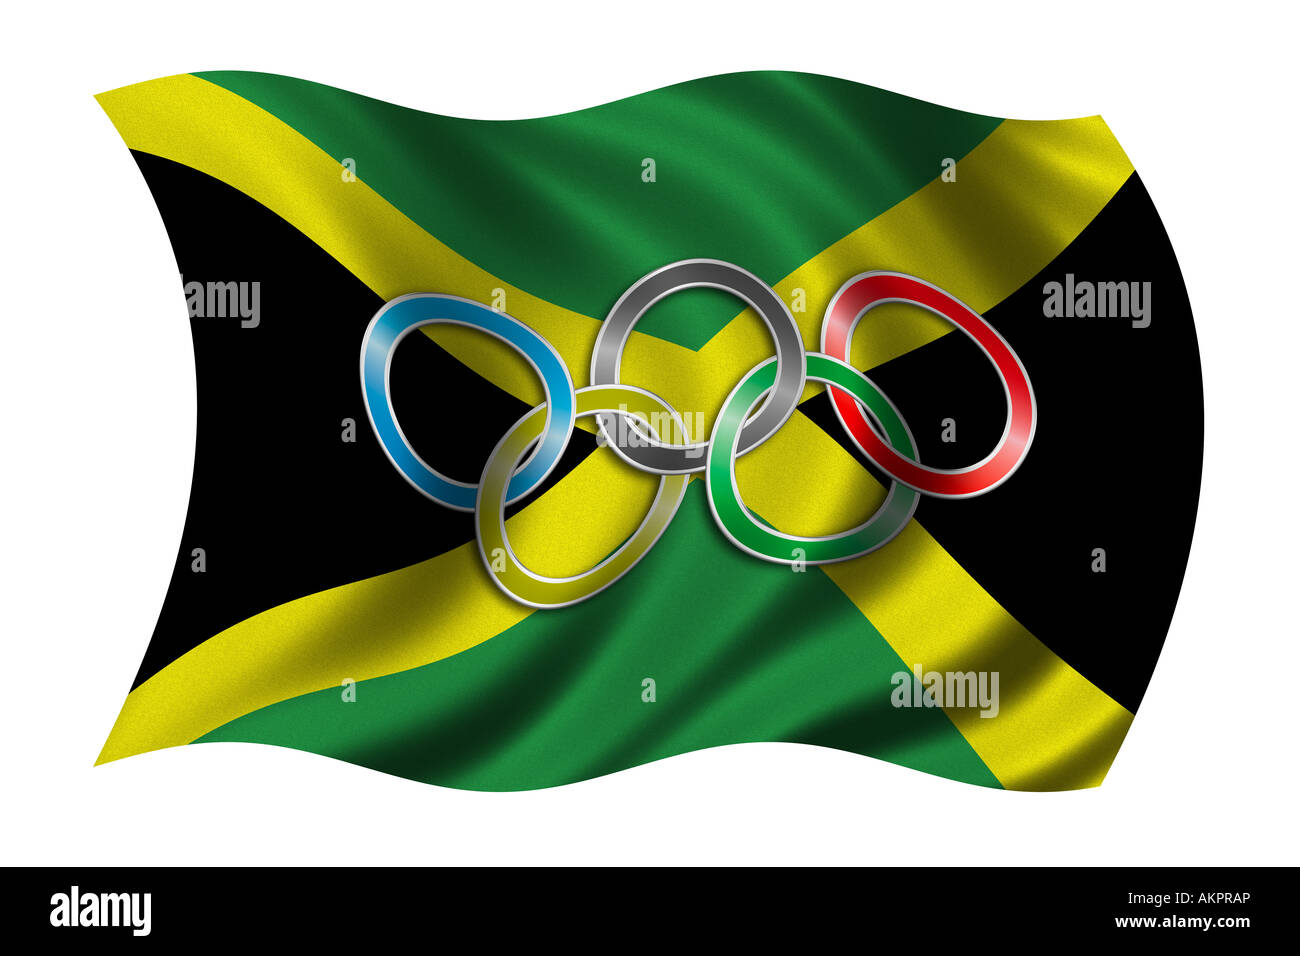 Jamaica olympics